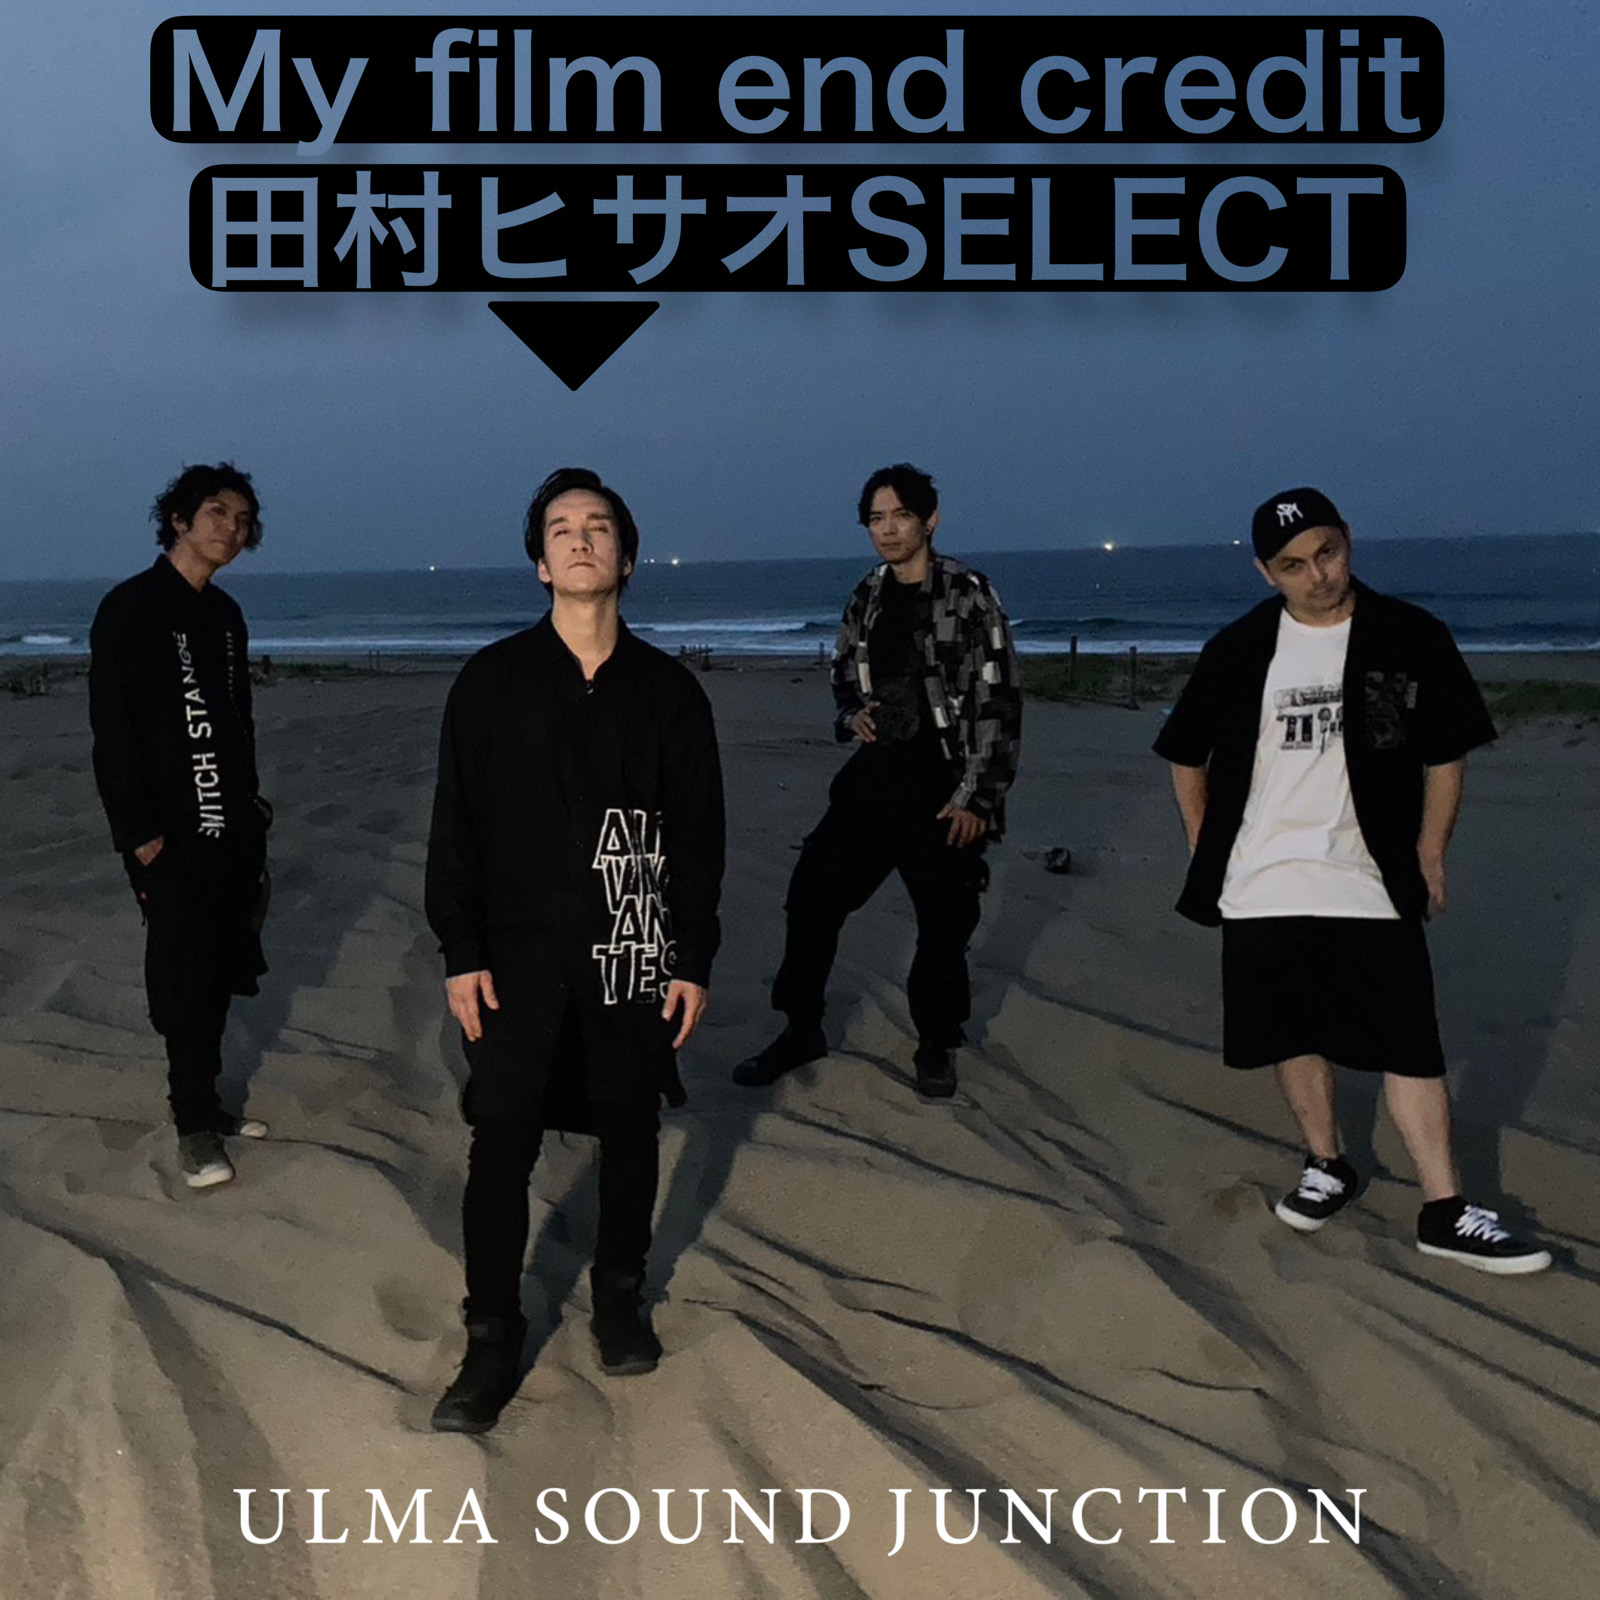 My film end credit【田村ヒサオSELECT】